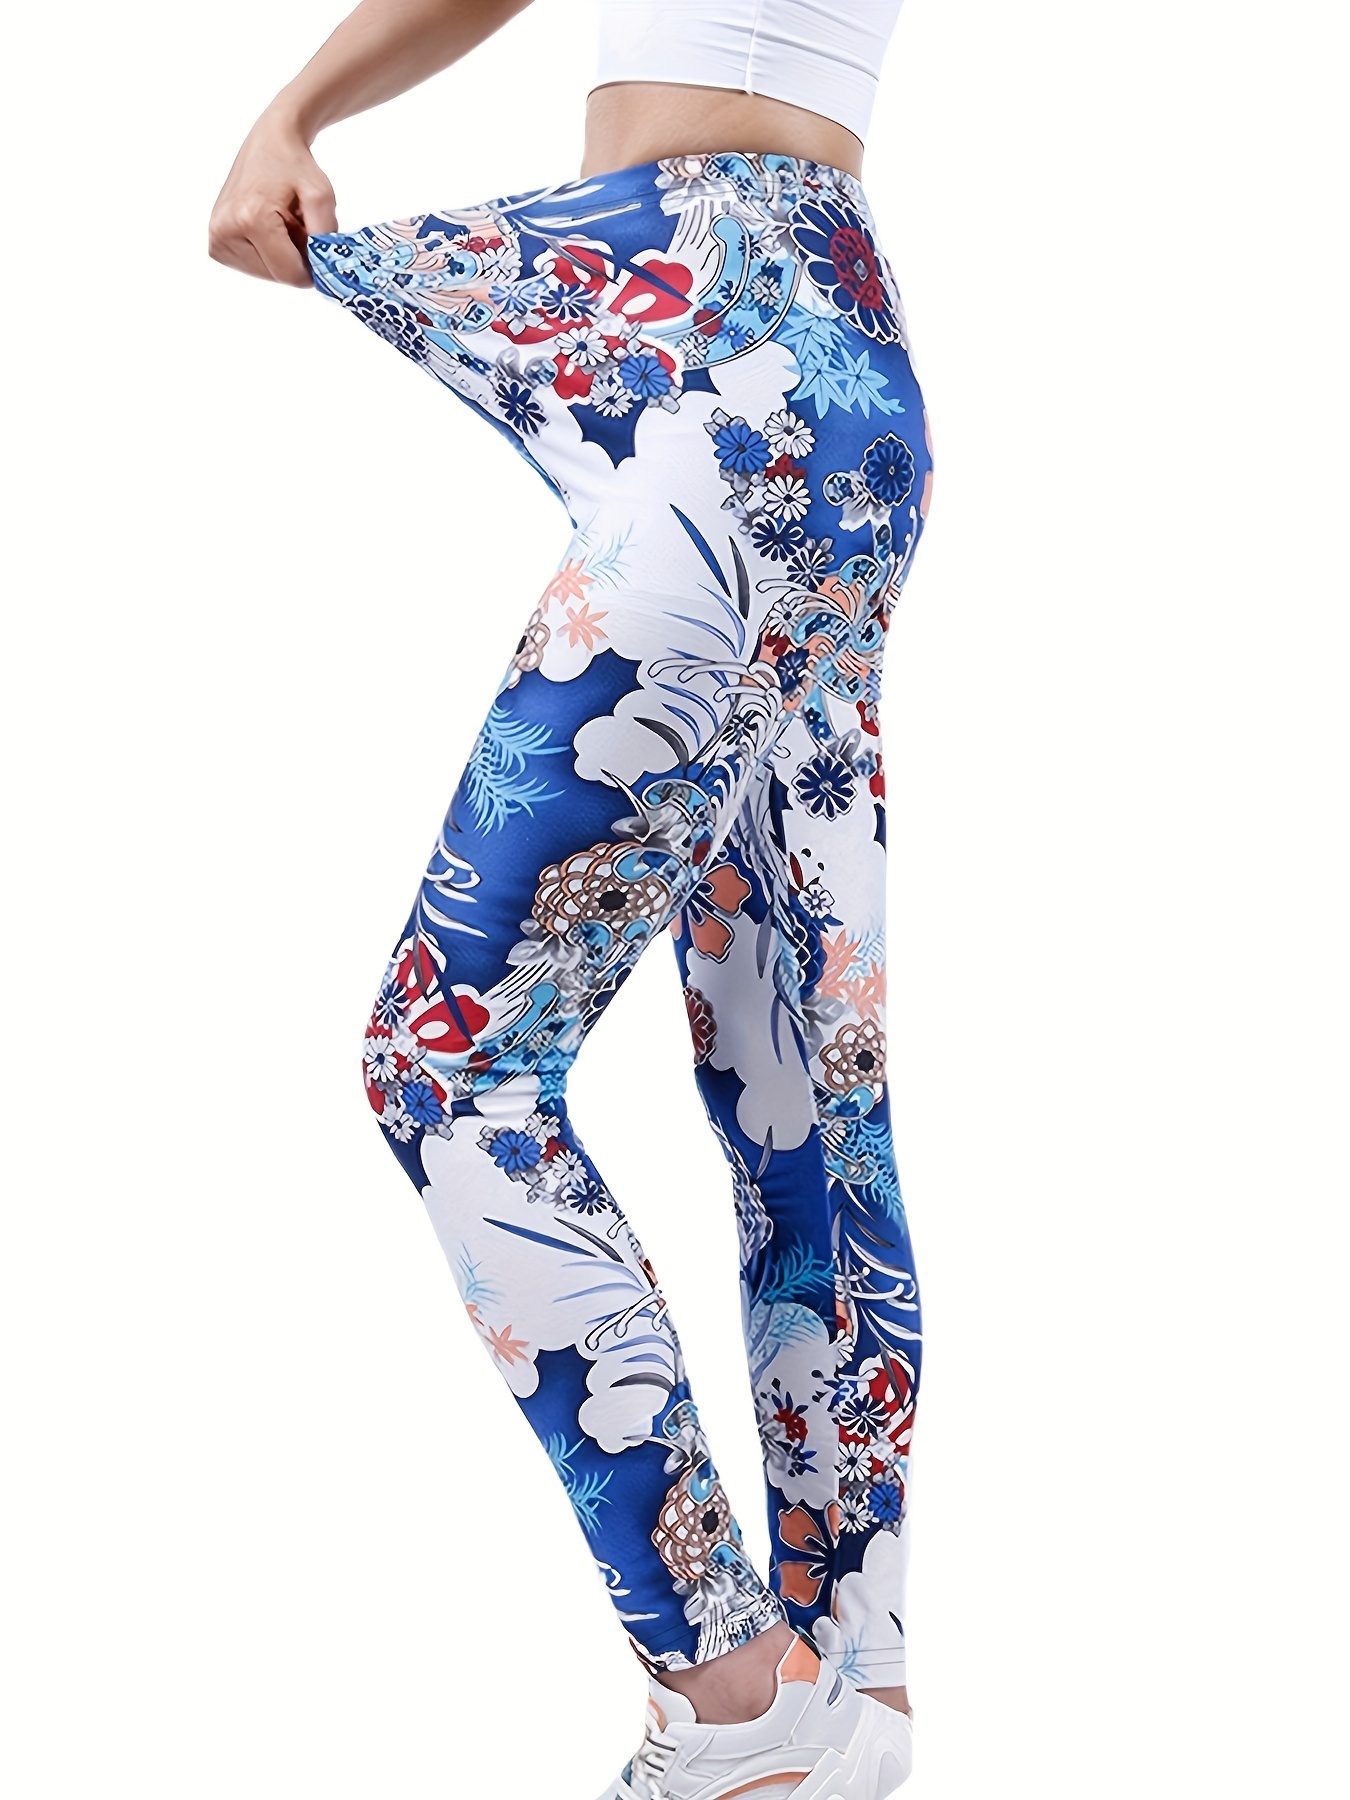 Women's Leggings Floral Printed Yoga Pants Casual High Waist